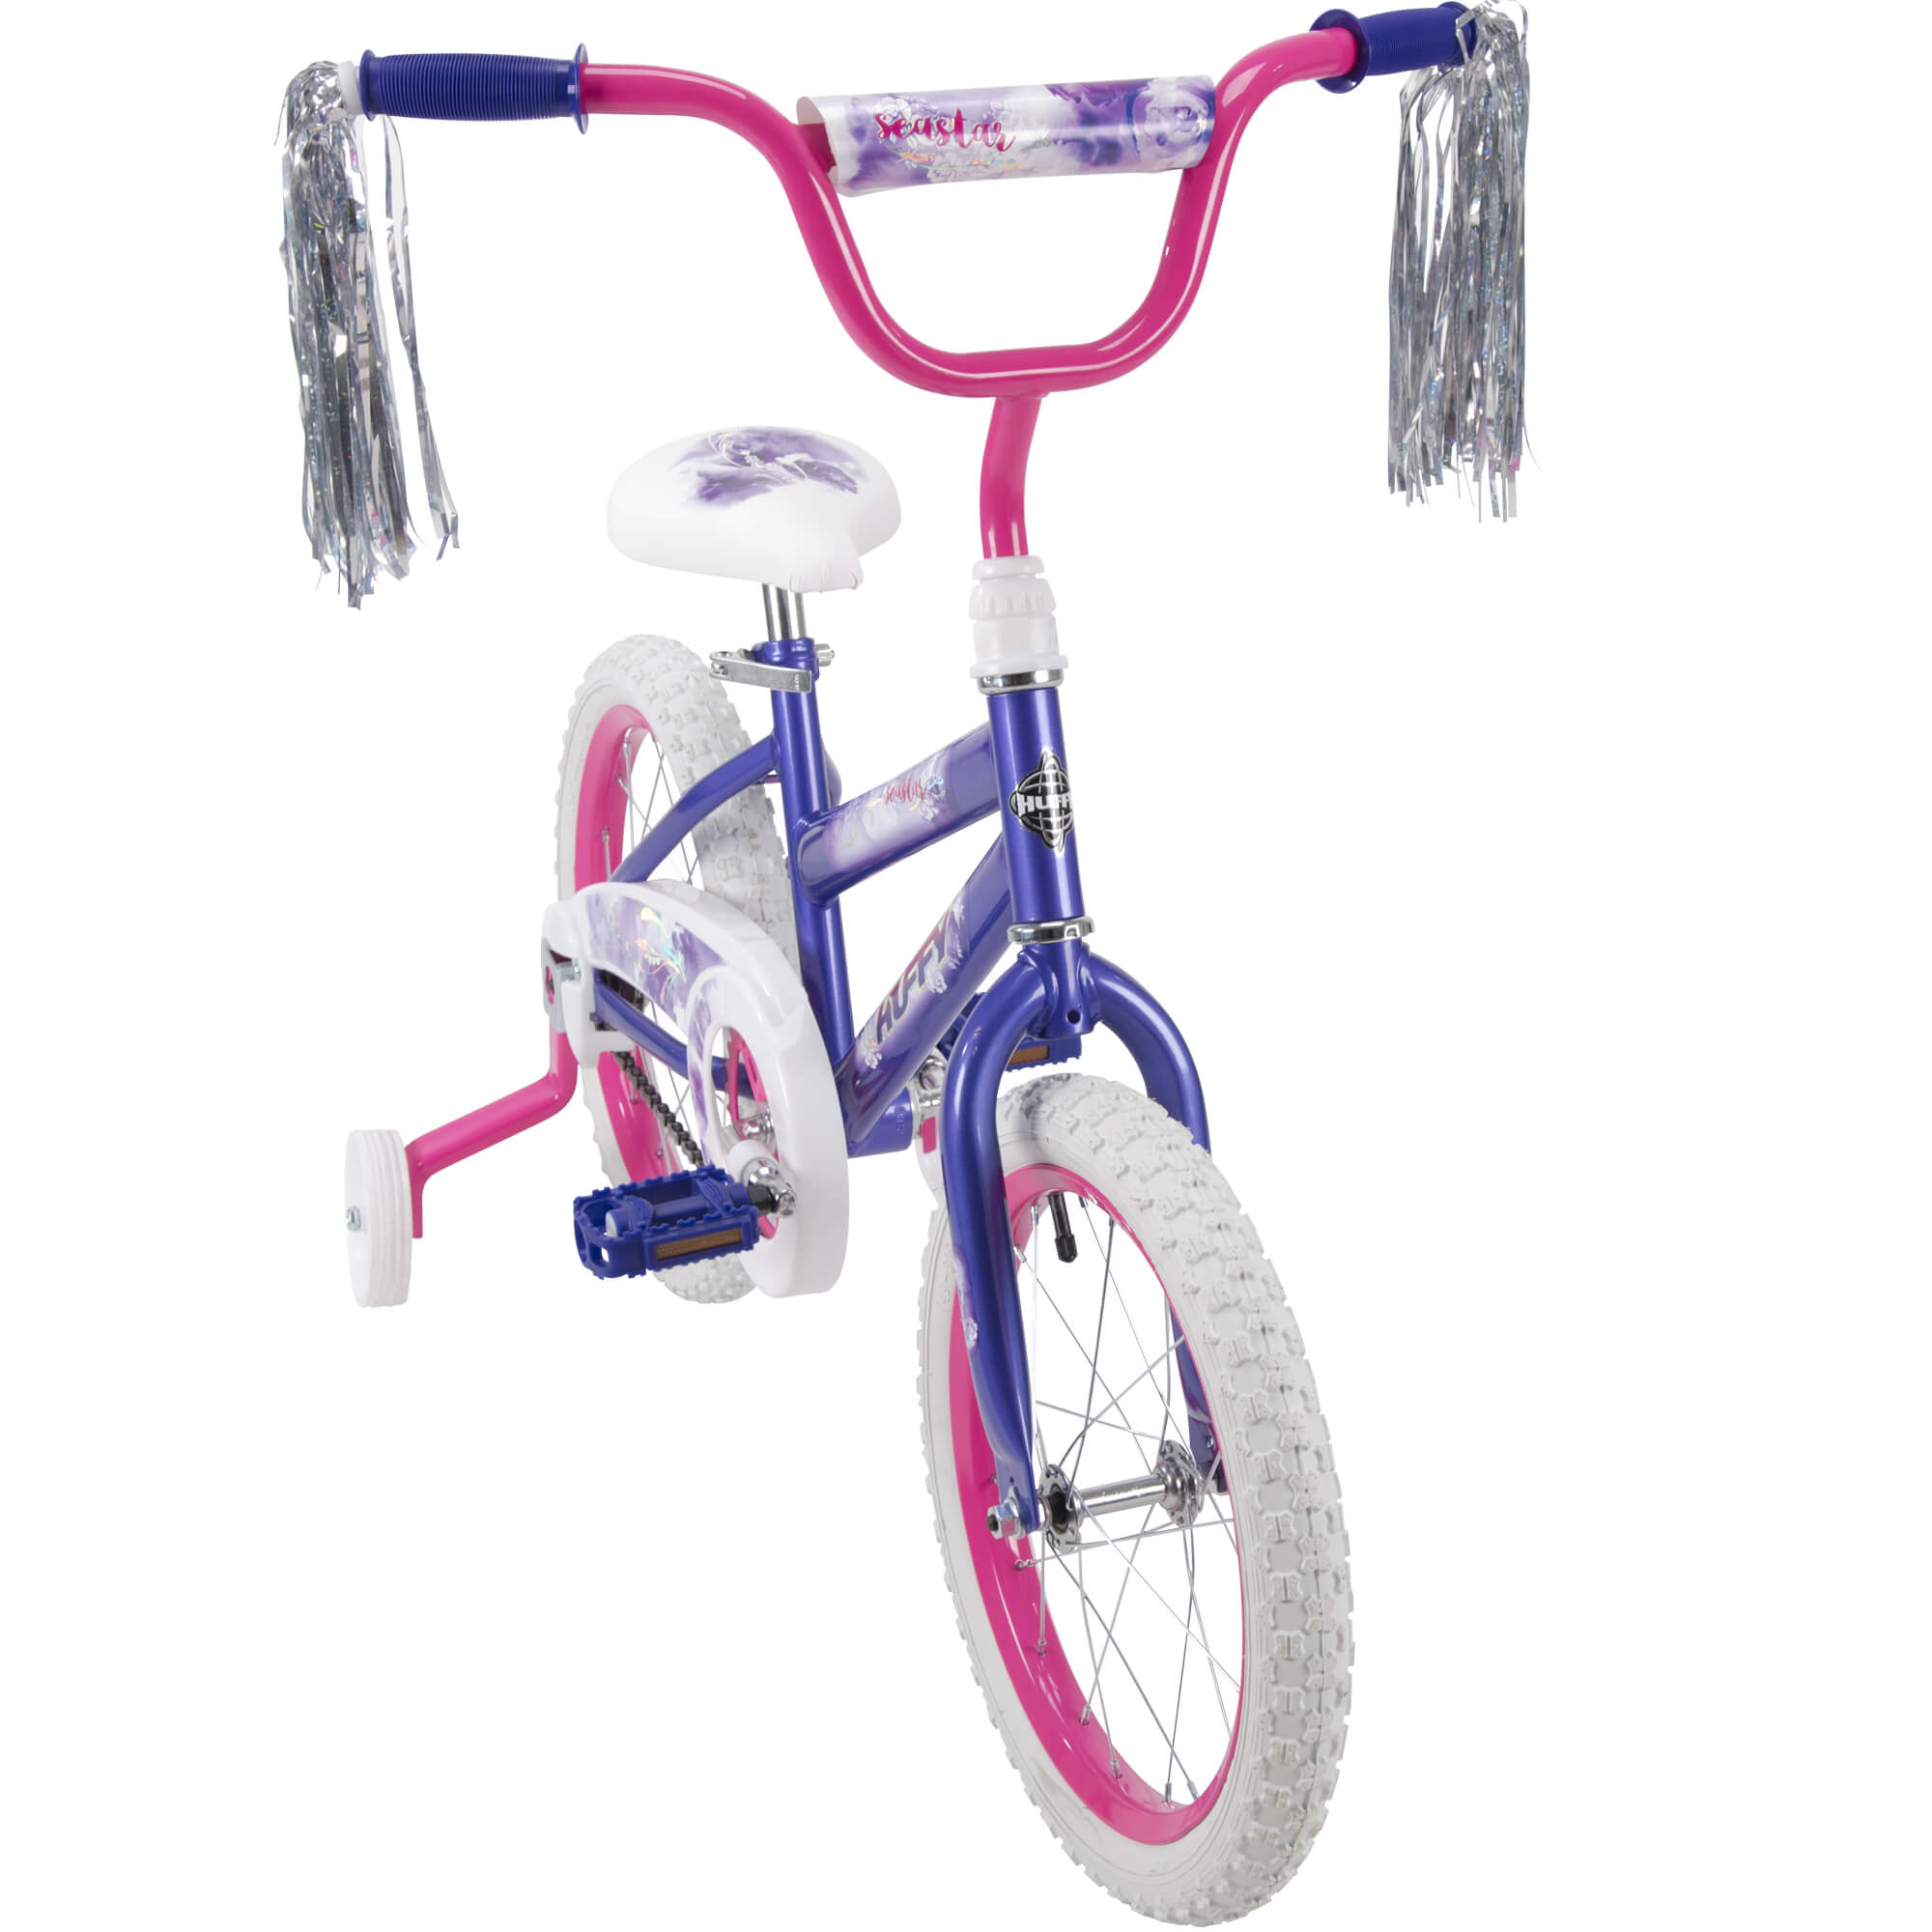 Huffy 16" Sea Star EZ Build Kids Bike for Girls', Purple - image 2 of 5